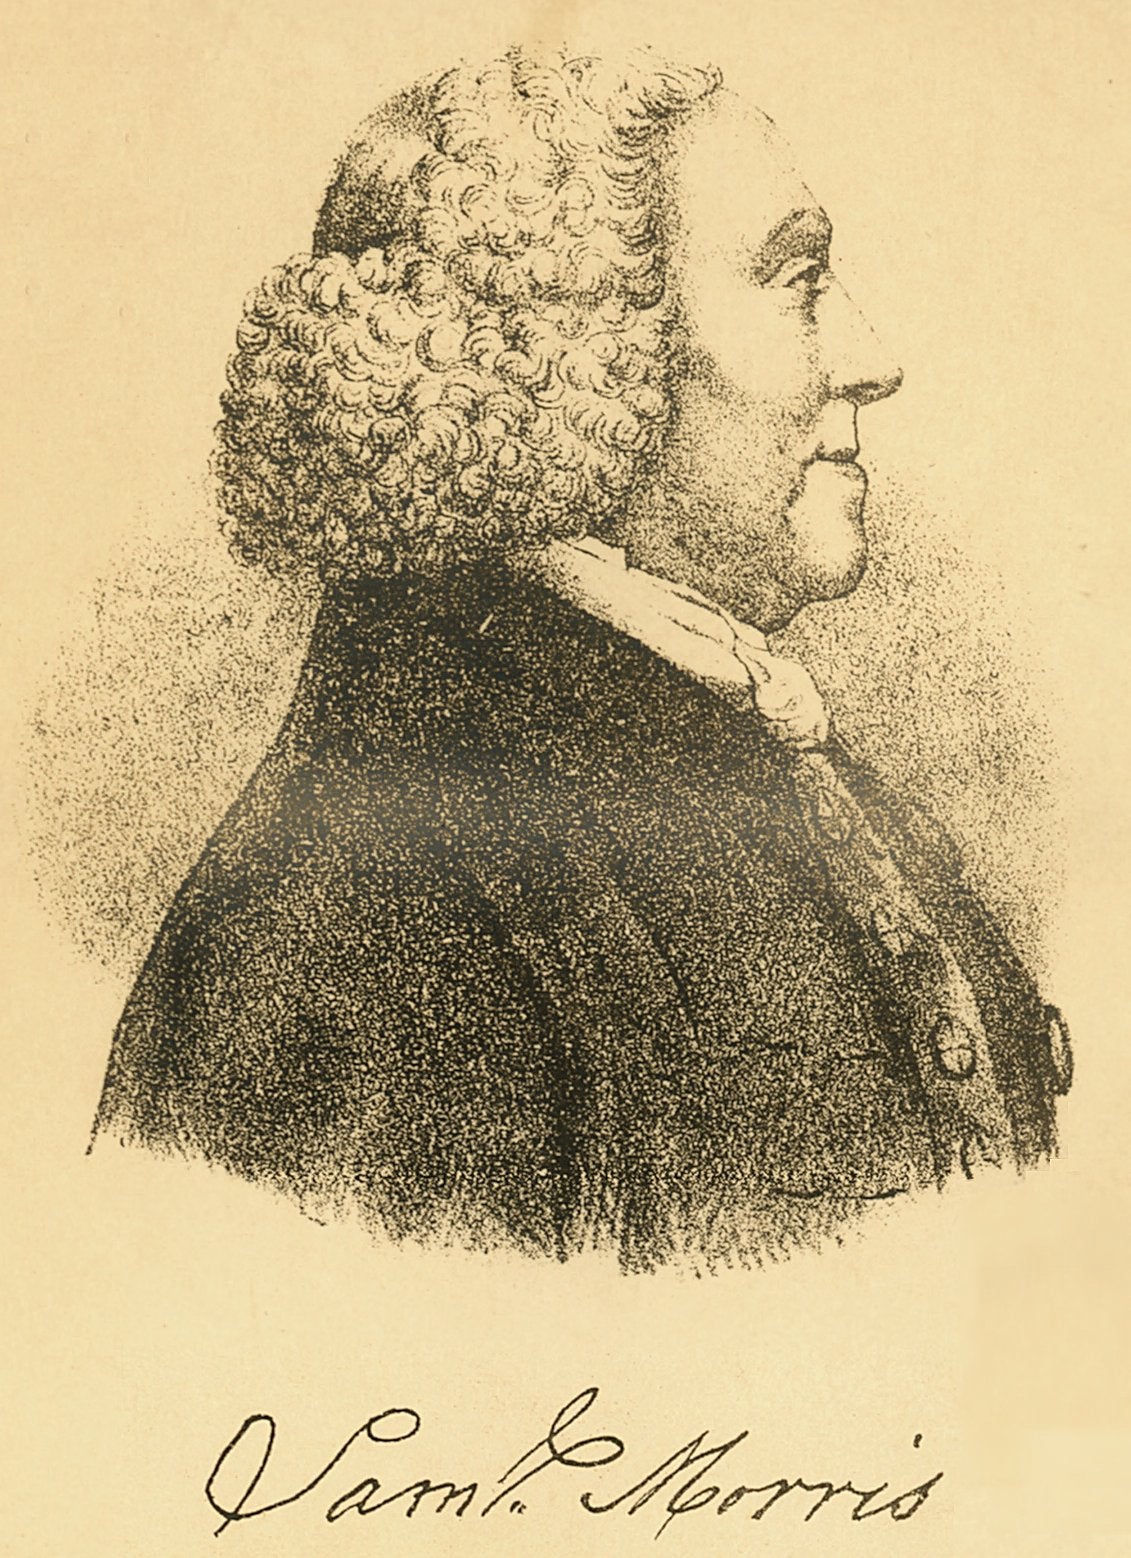 Samuel Morris, c. 1770